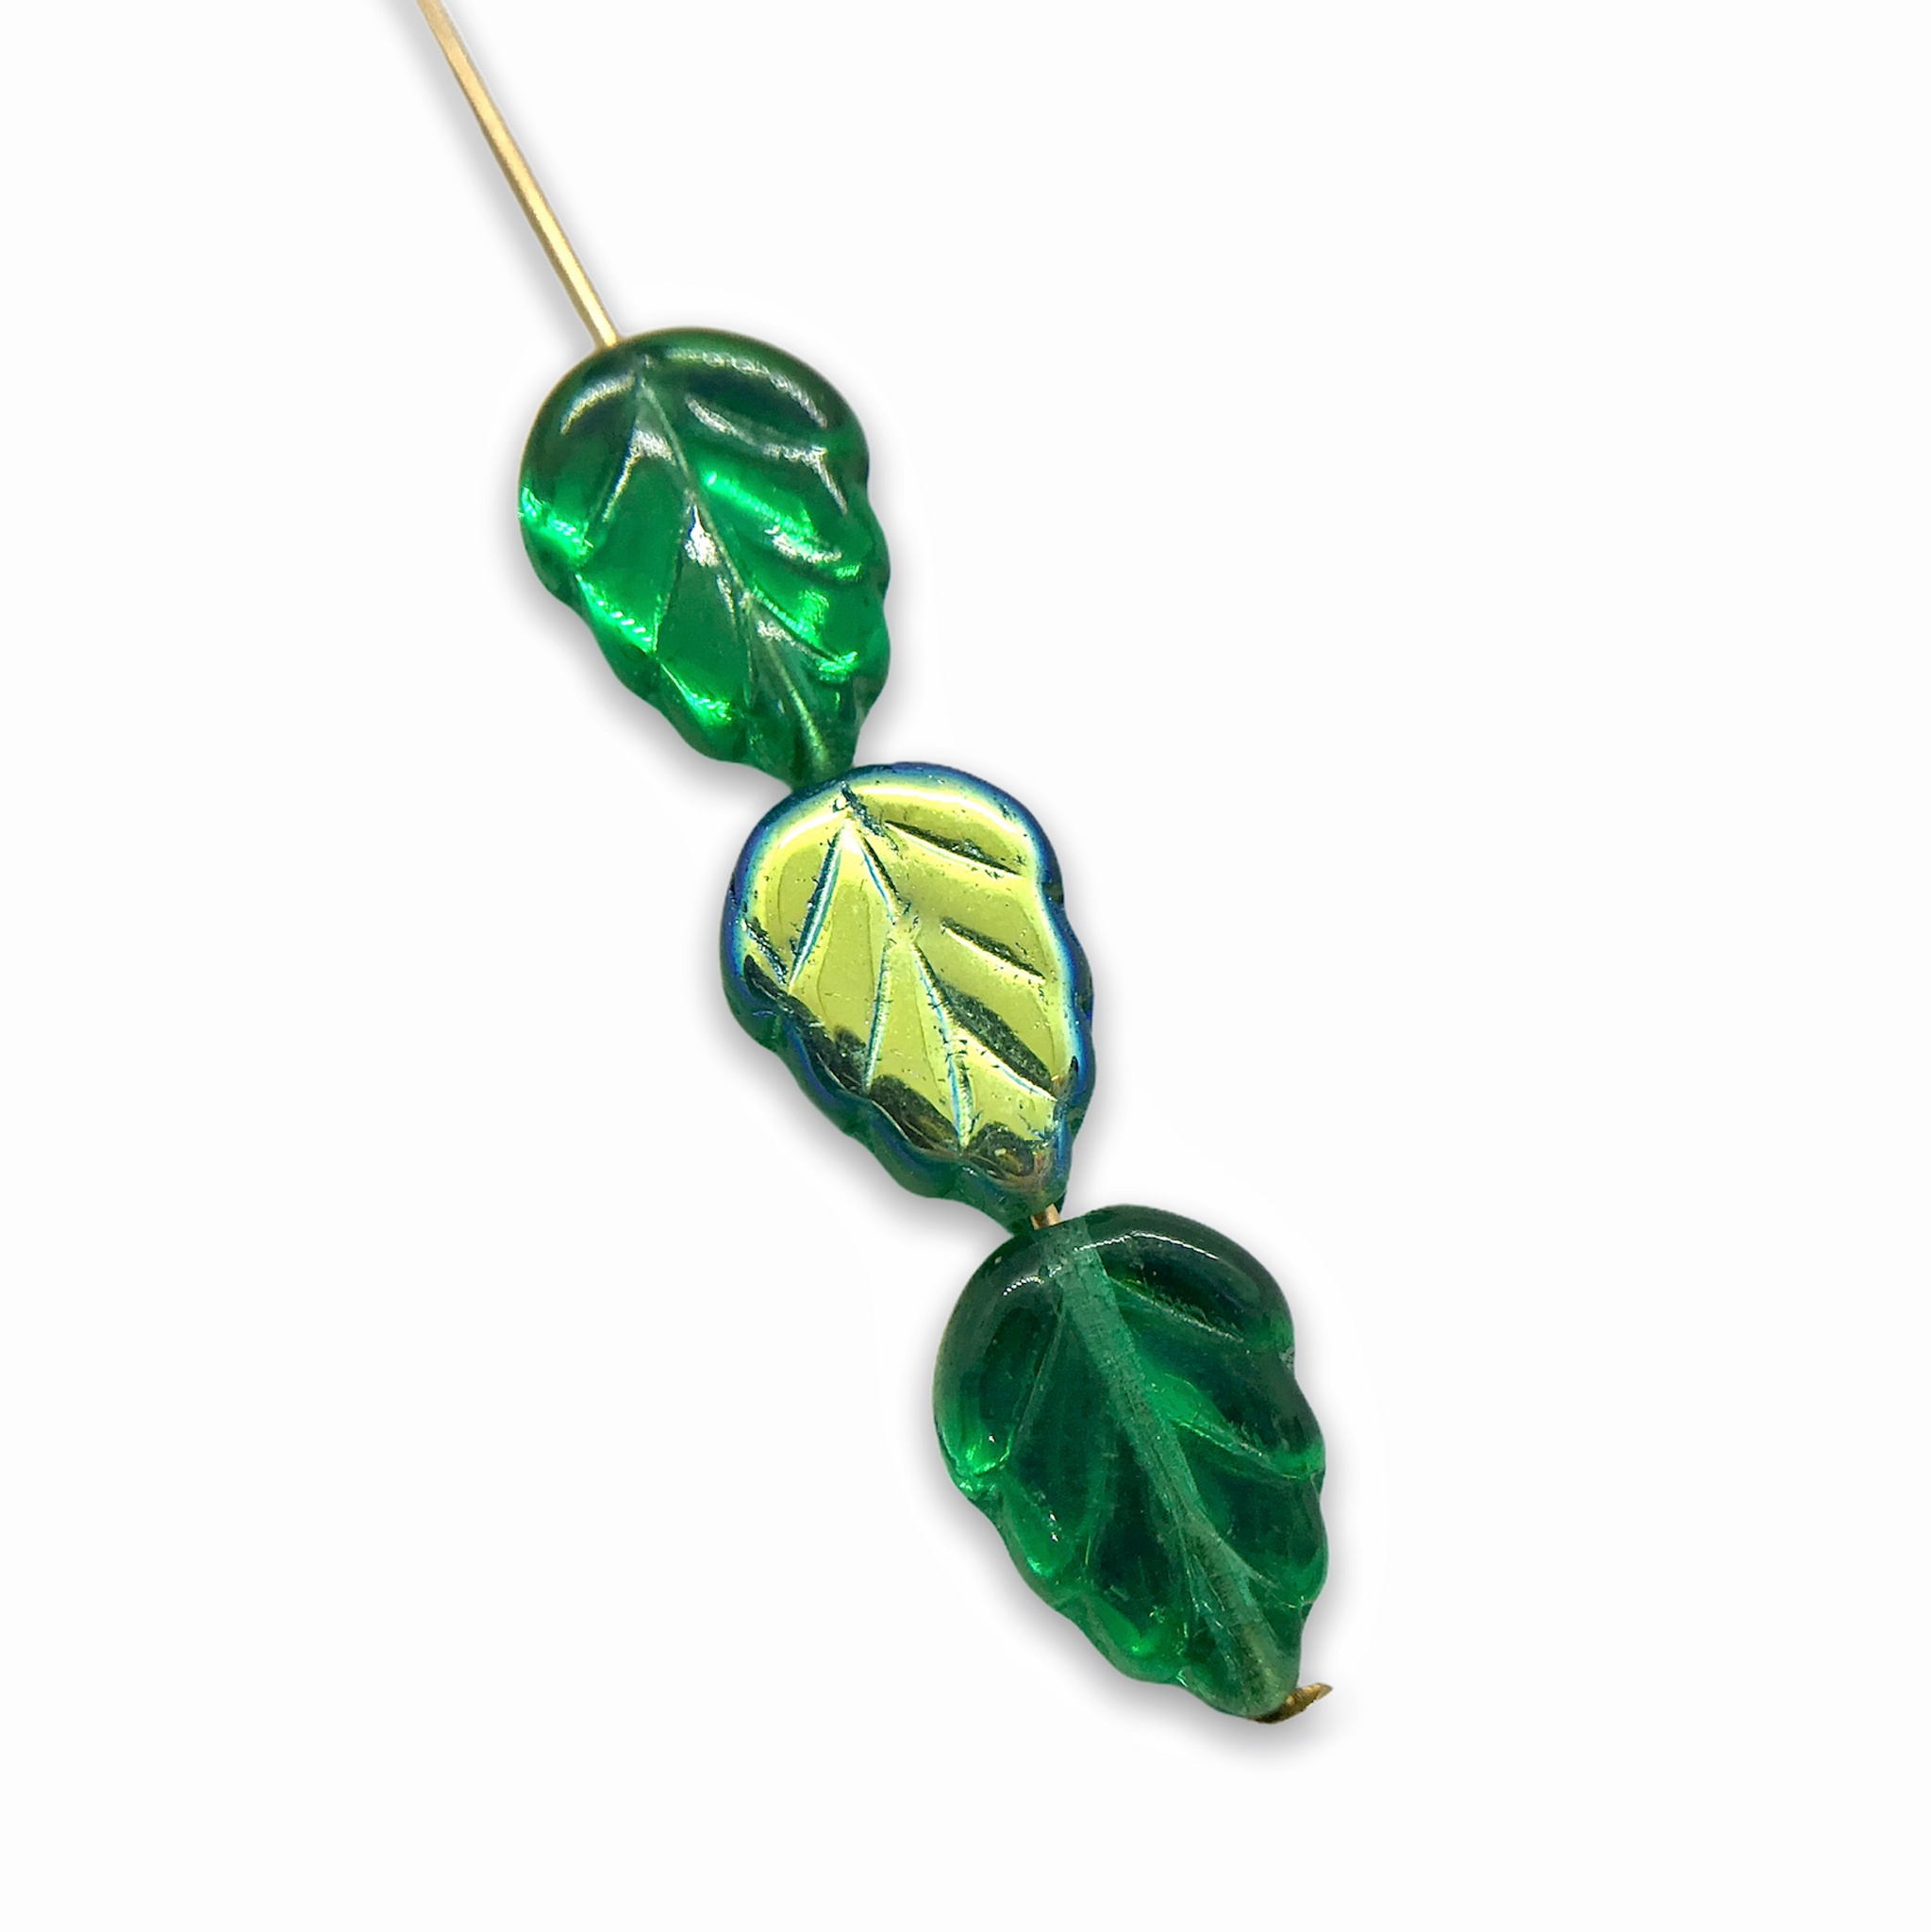 12x7mm Mixed blue green leaf beads, yellow inlays Czech glass